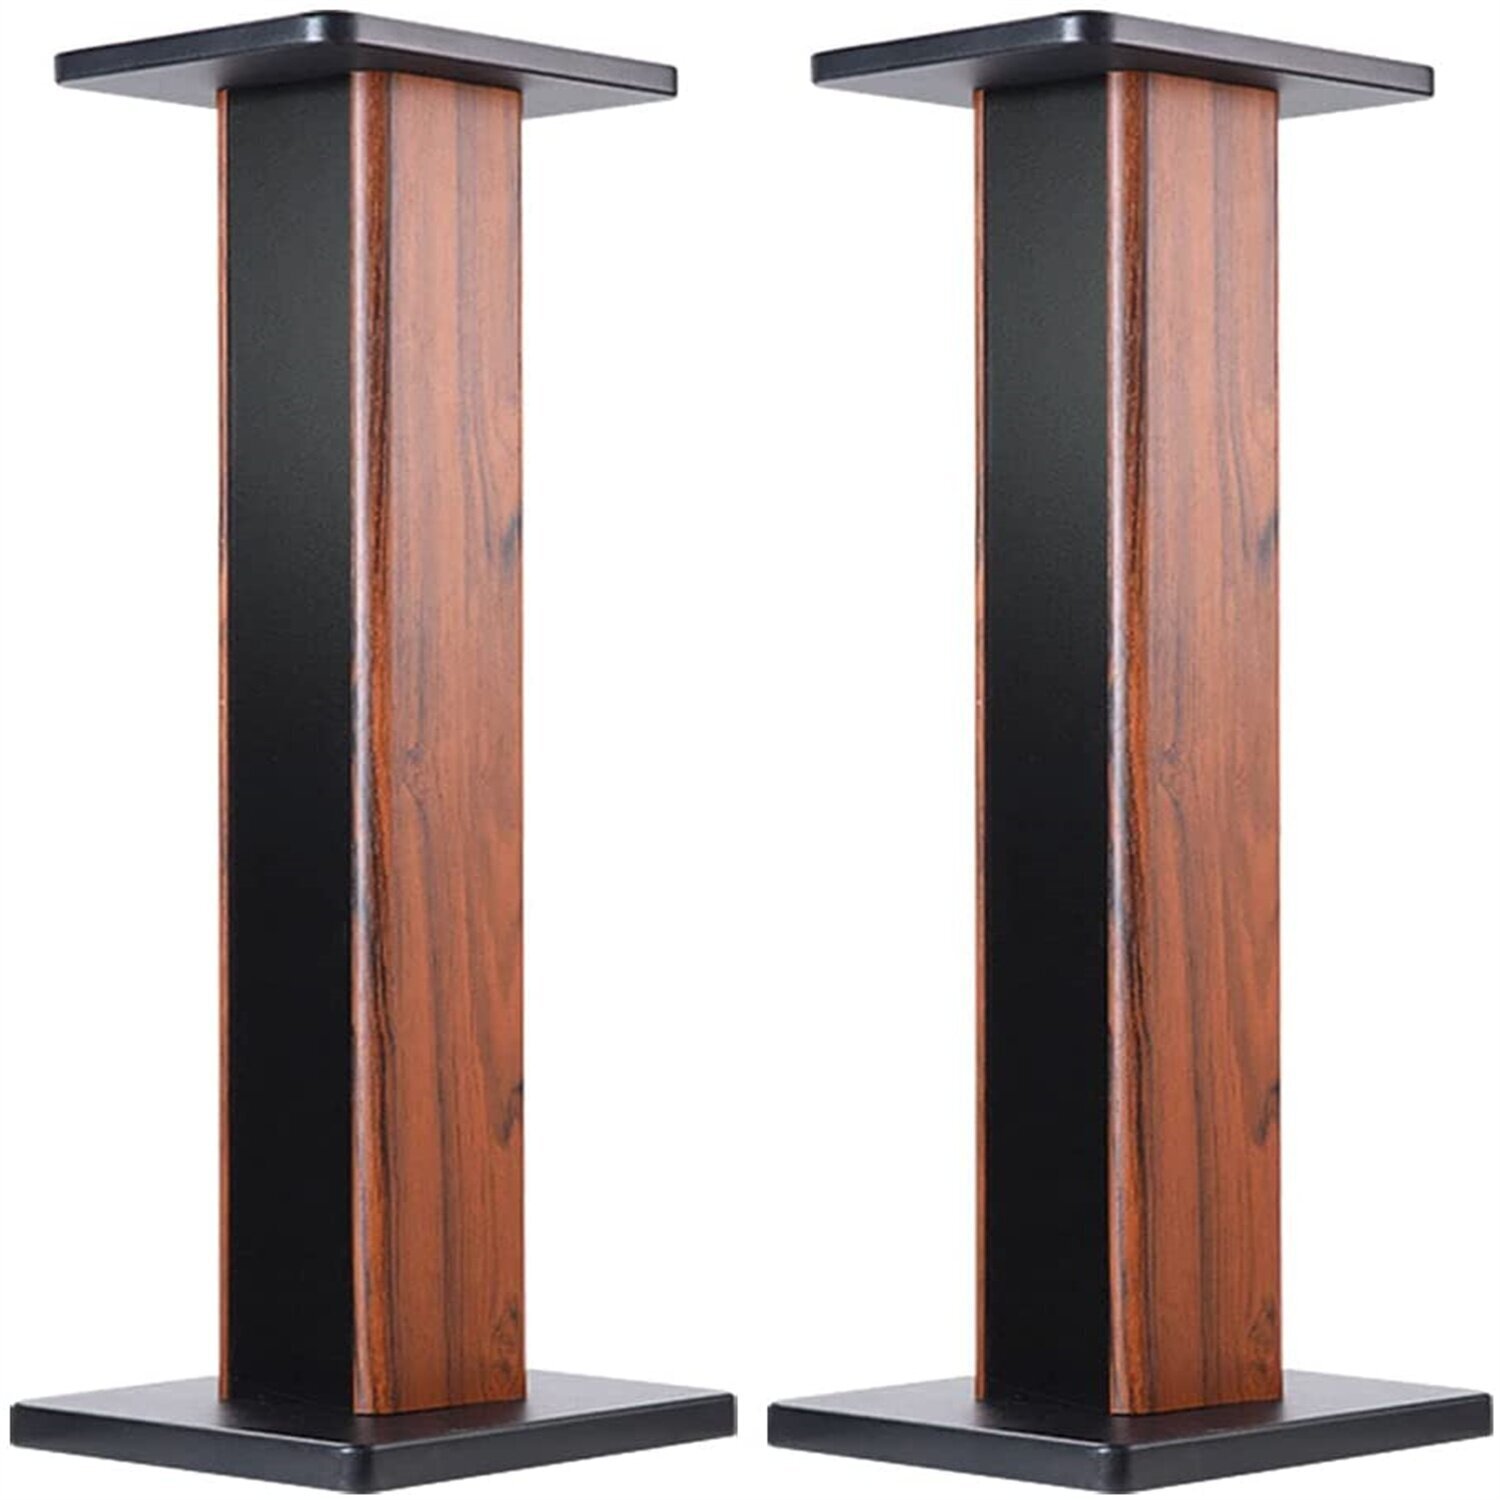 Set of 2 Wood Grain Furniture Speaker Stands